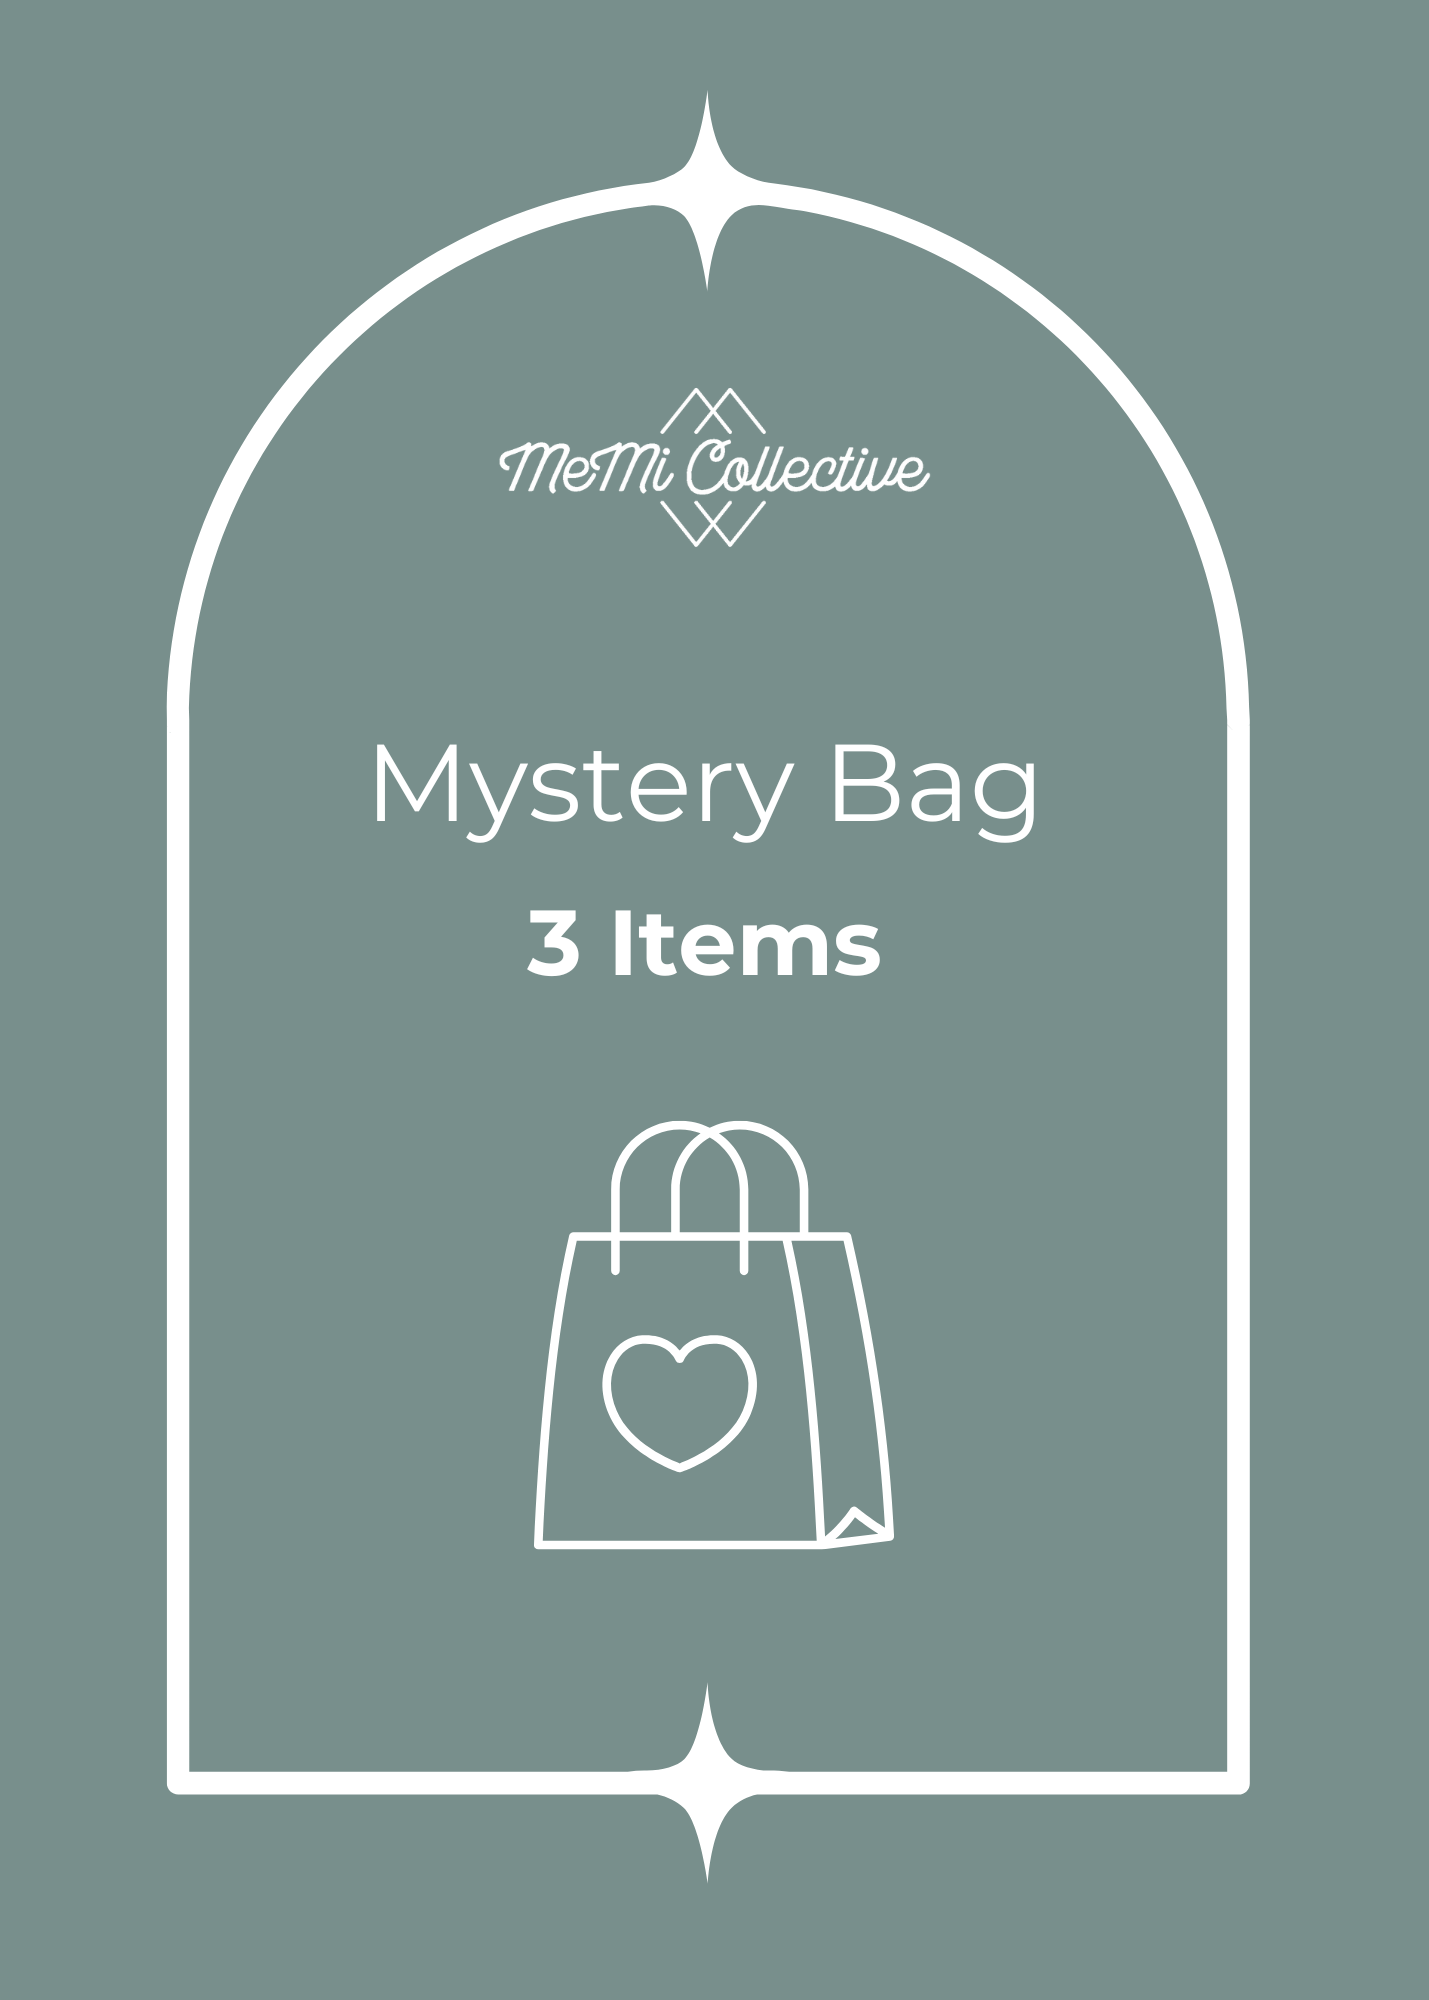 The Mystery Bag